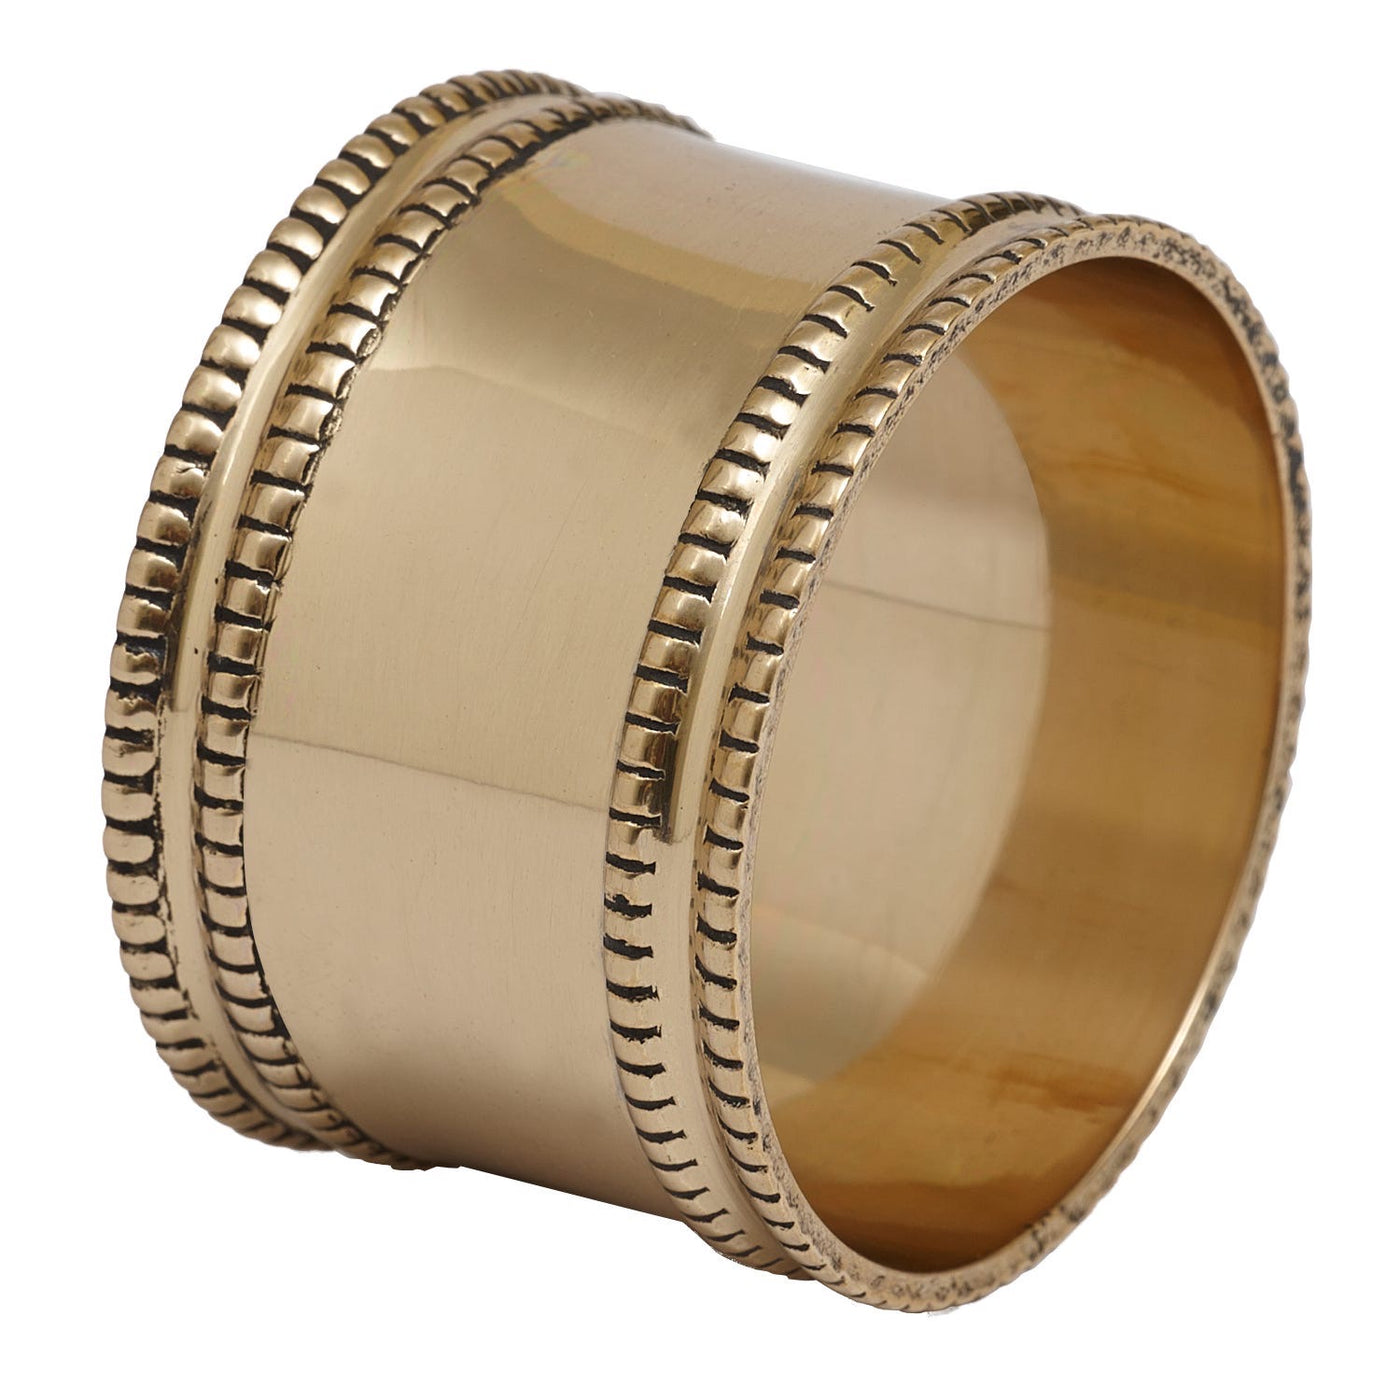 Antique Gold Band Napkin Ring